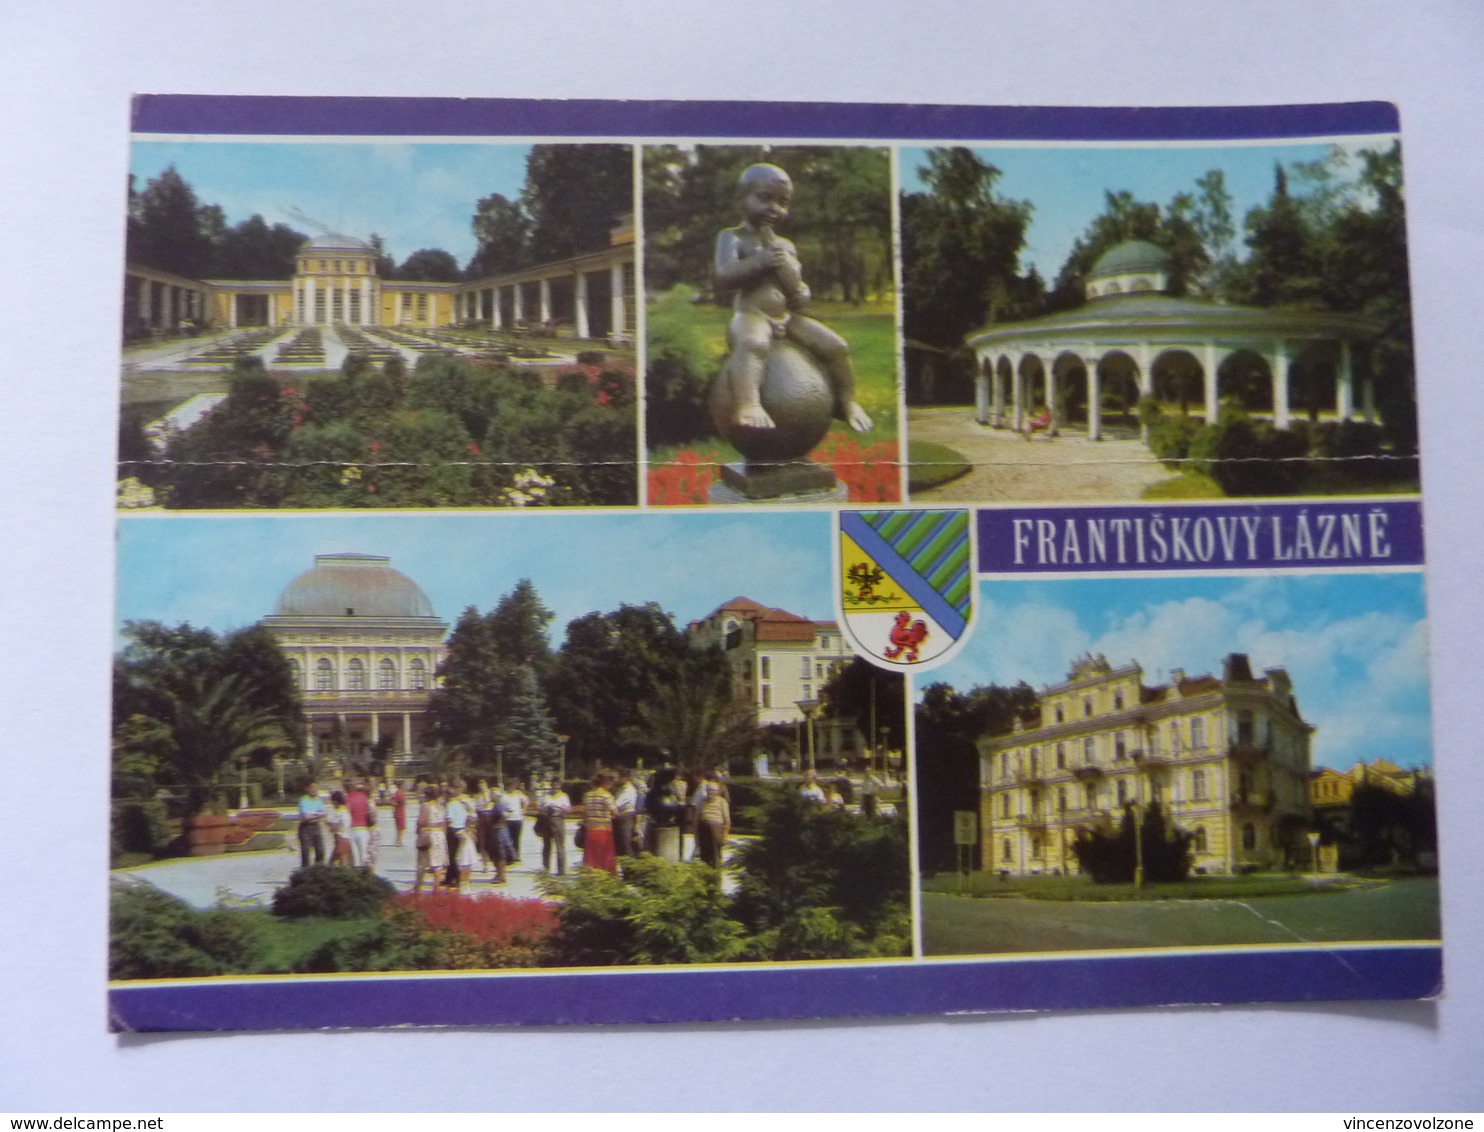 Cartolina Viaggiata "FRANTISKOVY LAZNE" 1987 - Repubblica Ceca